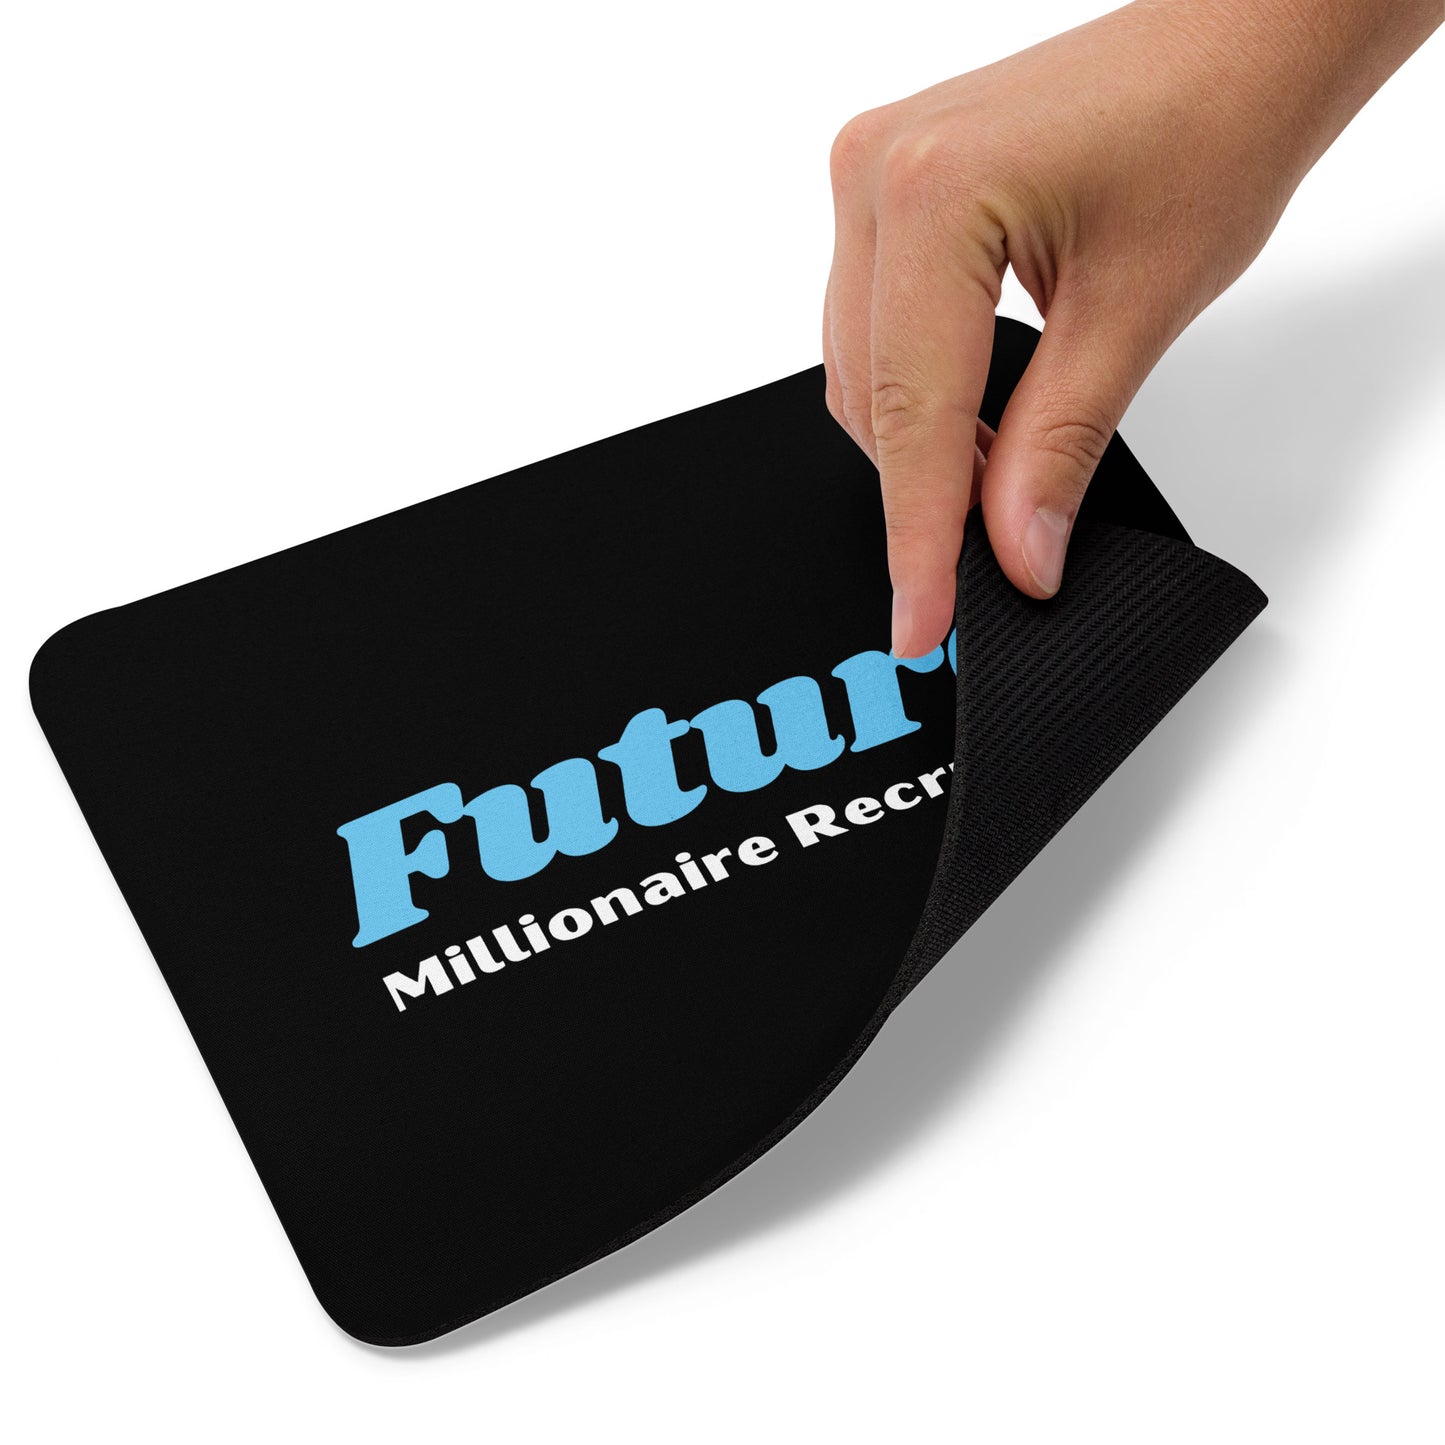 Future Millionaire Recruiter Mouse pad  - The Millionaire Recruiter